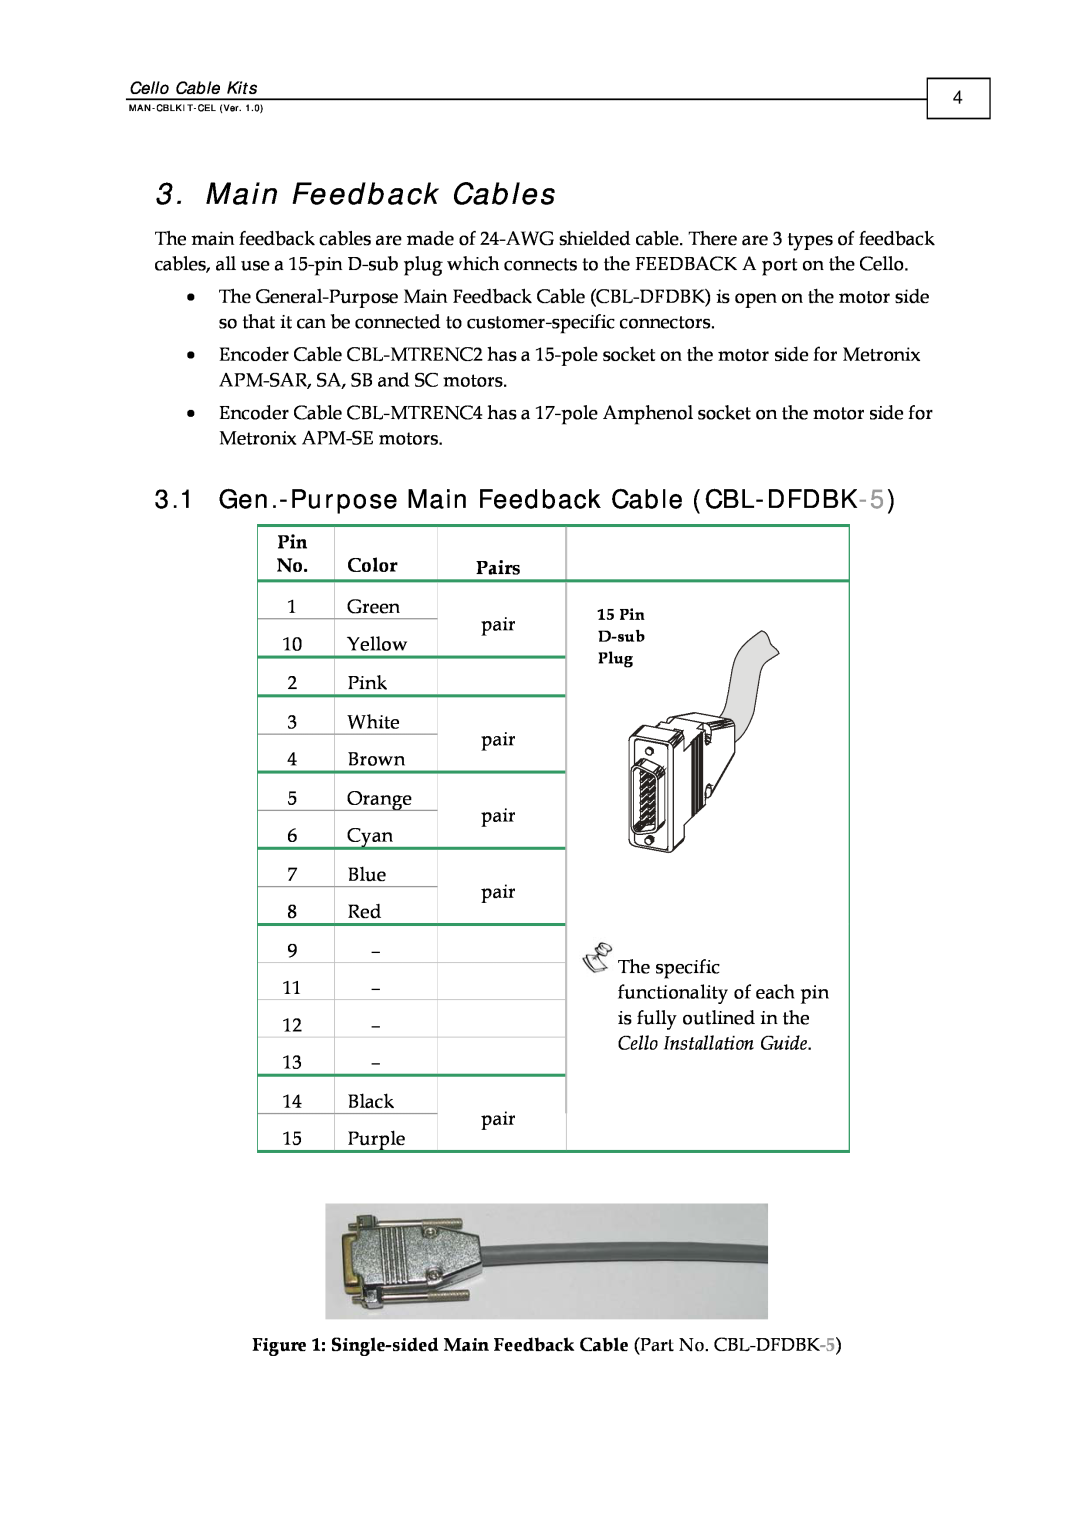 Elmo CBL-MTRENC2 manual Main Feedback Cables, 3.1 Gen.-Purpose Main Feedback Cable CBL-DFDBK-5, Cello Installation Guide 